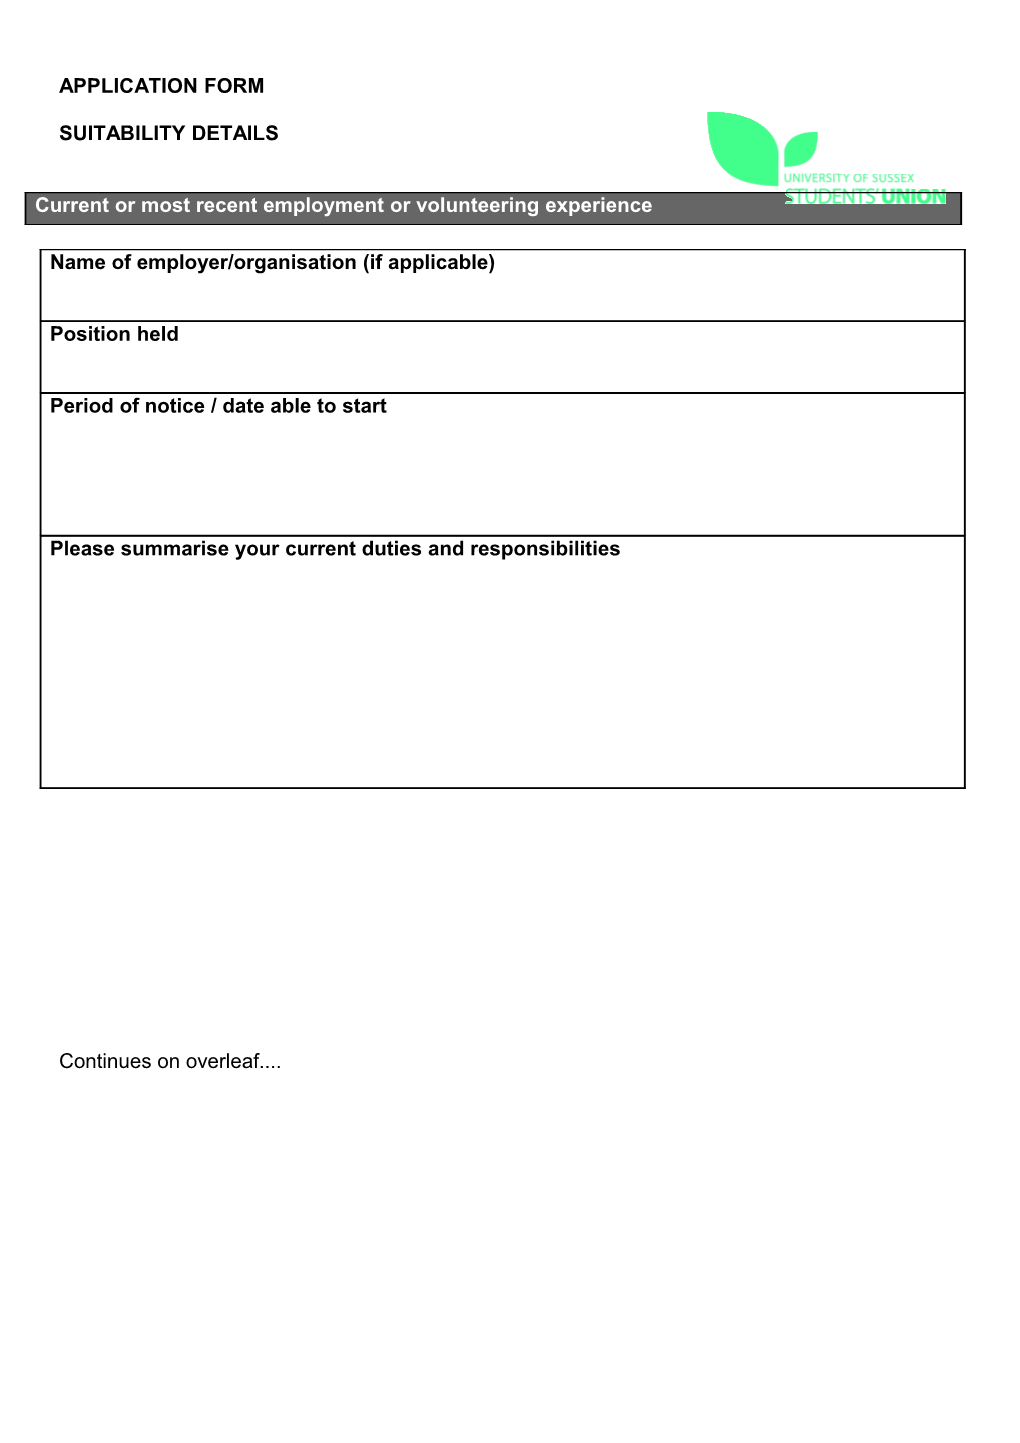 Application Form - Full 1415 s2